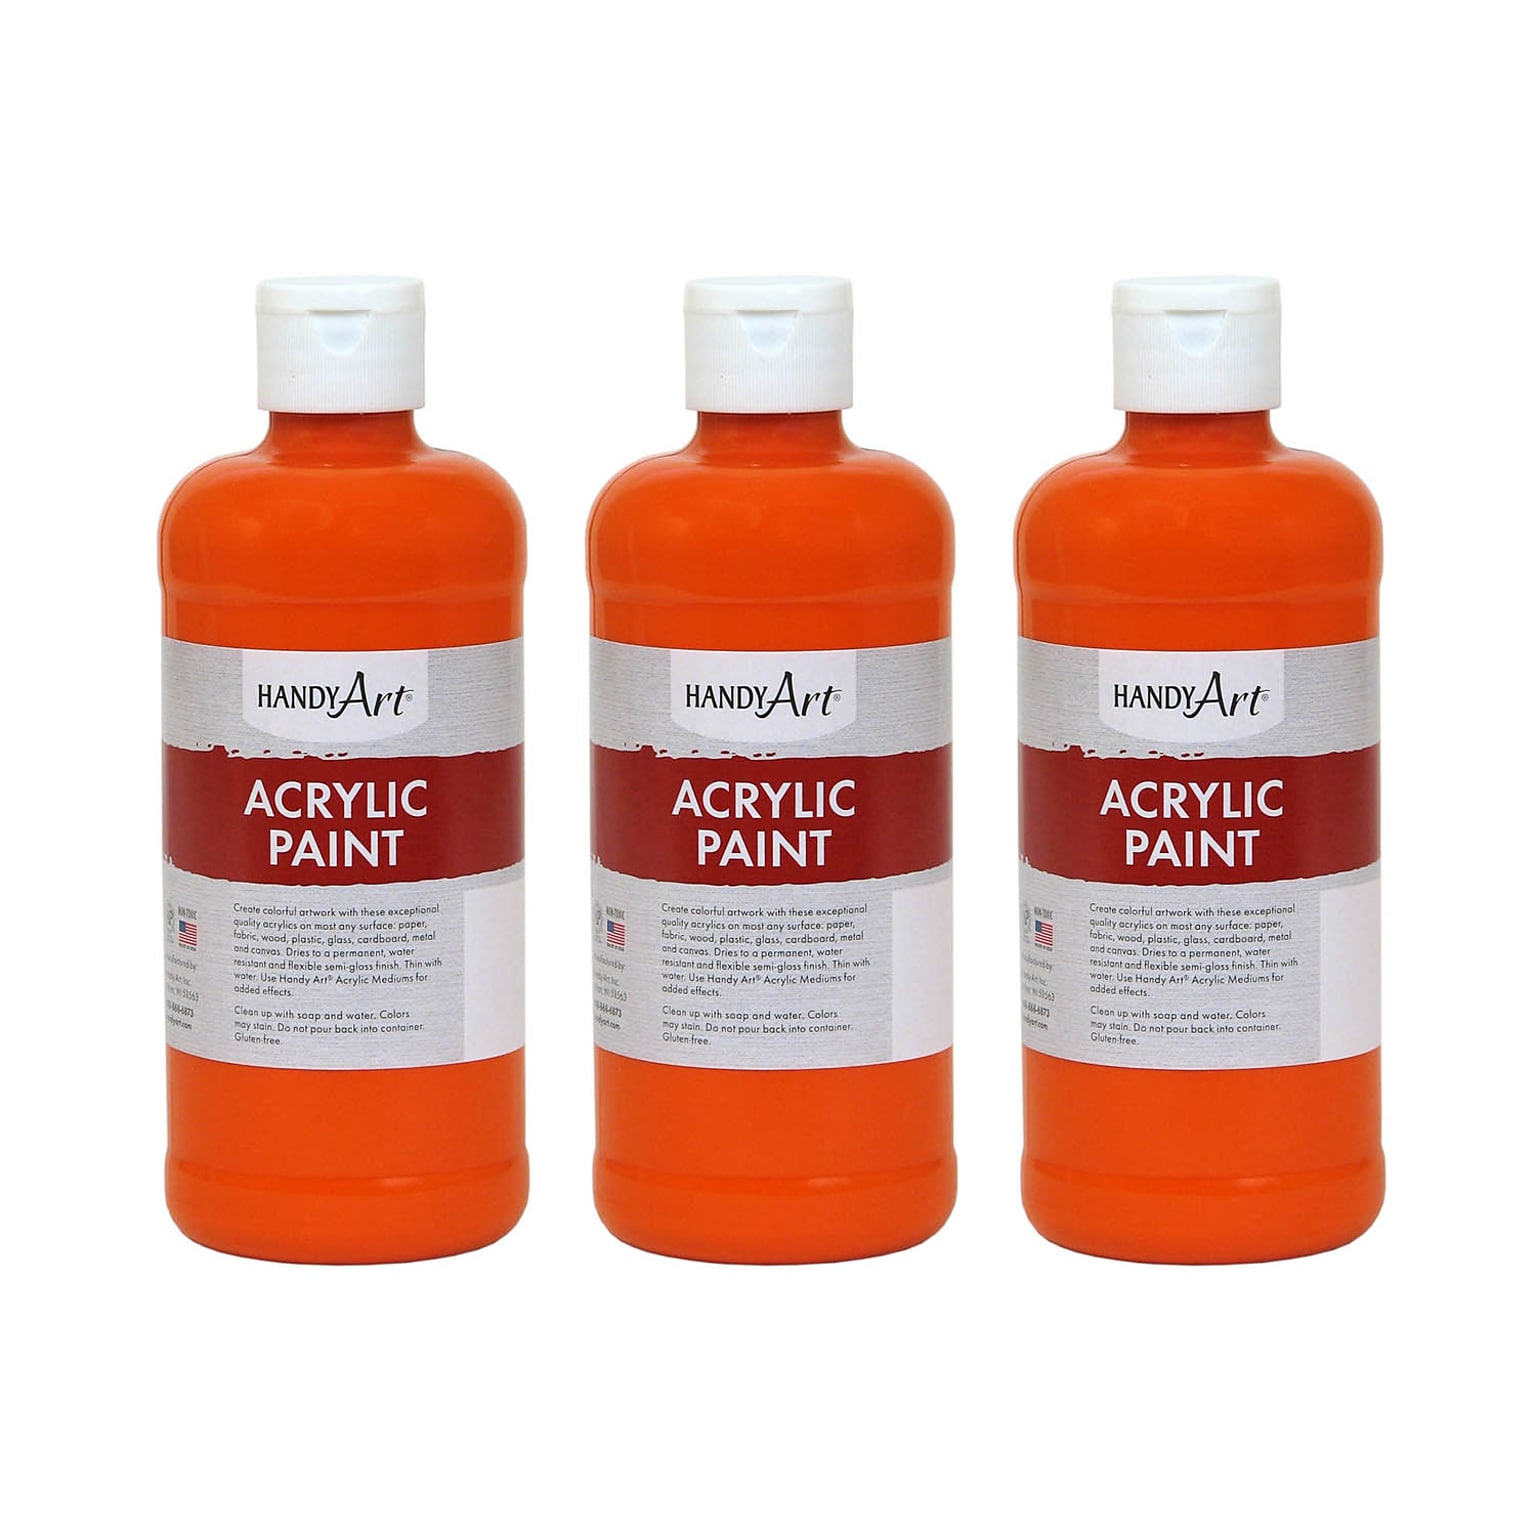 Handy Art Acrylic Paint, 16 oz, Chrome Orange, Pack of 3 (RPC101025-3)